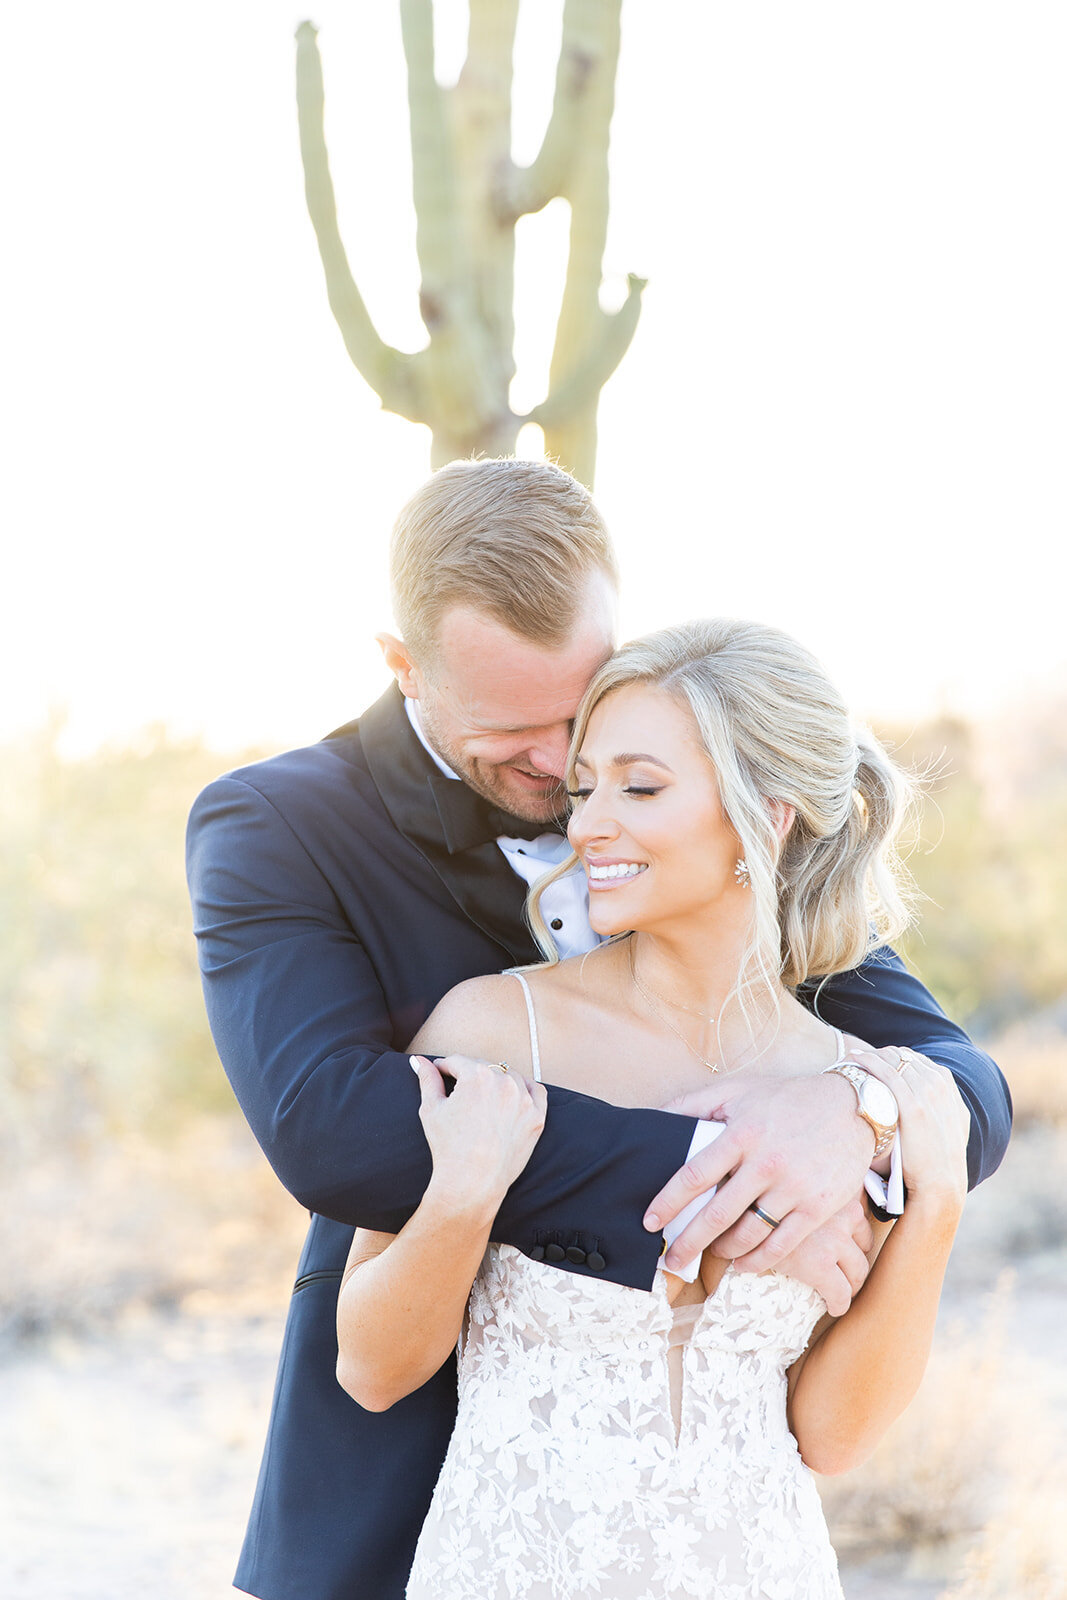 Karlie Colleen Photography - Ashley & Grant Wedding - The Paseo - Phoenix Arizona-794